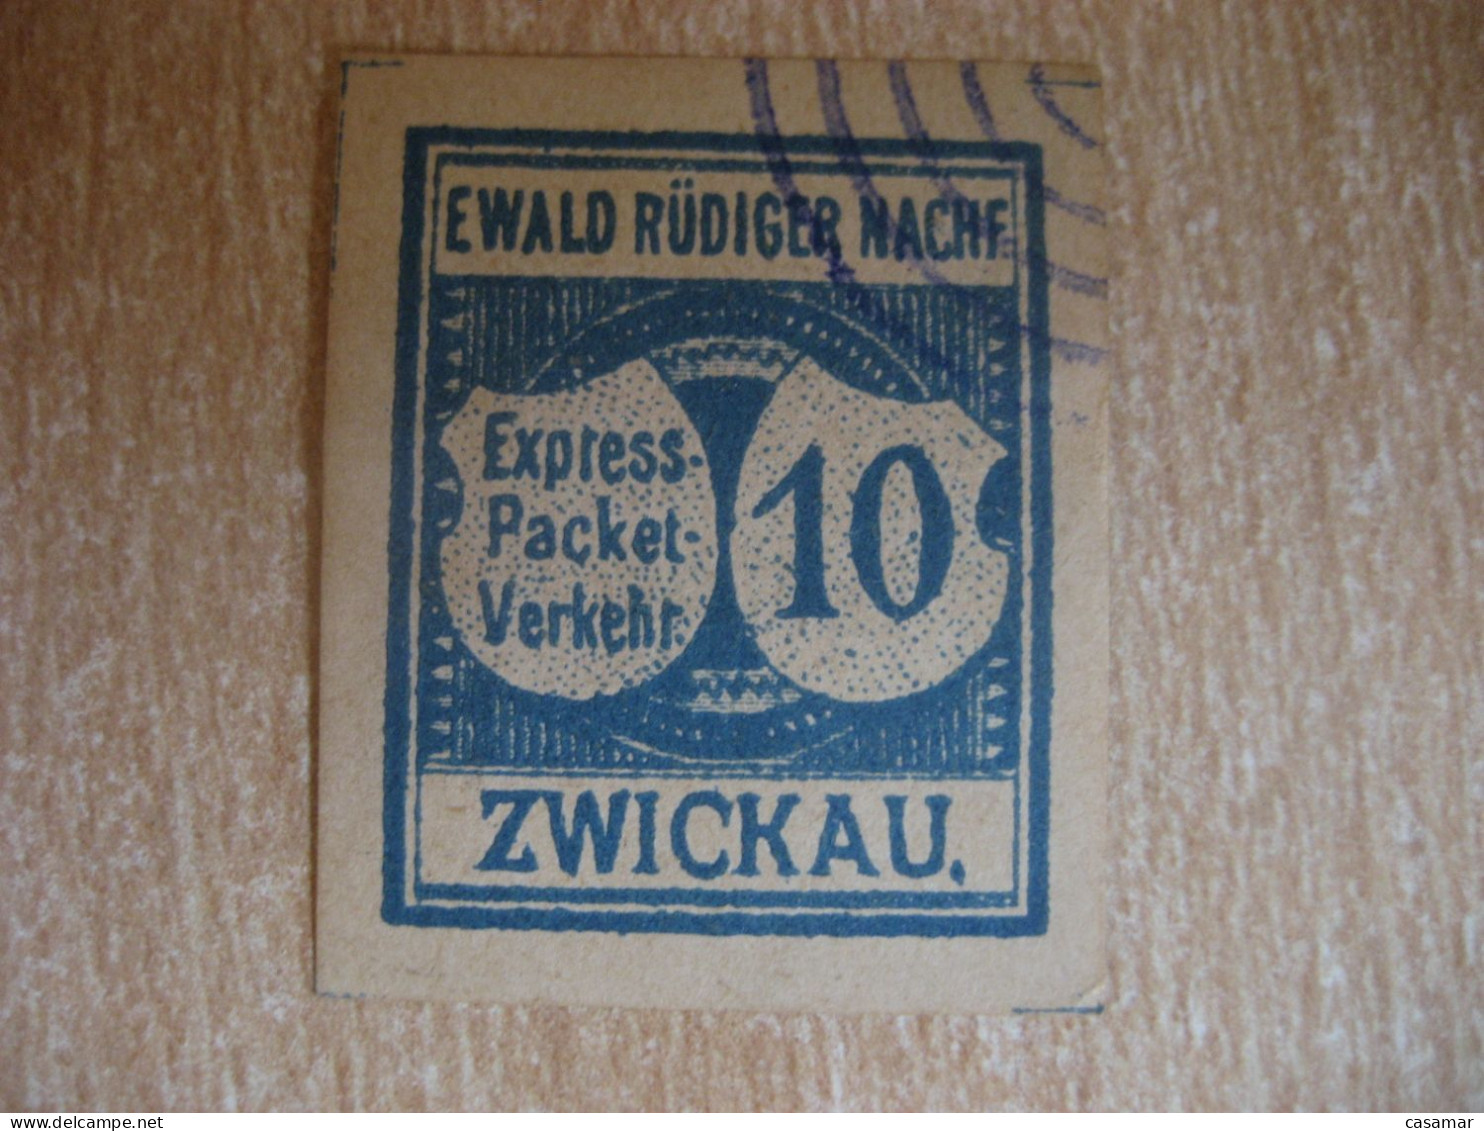 ZWICKAU 1889 Ewald Rudiger Nachf 10 Pf Michel A2 Express-Packet-Verkehr Privat Private Local Stamp GERMANY - Postes Privées & Locales